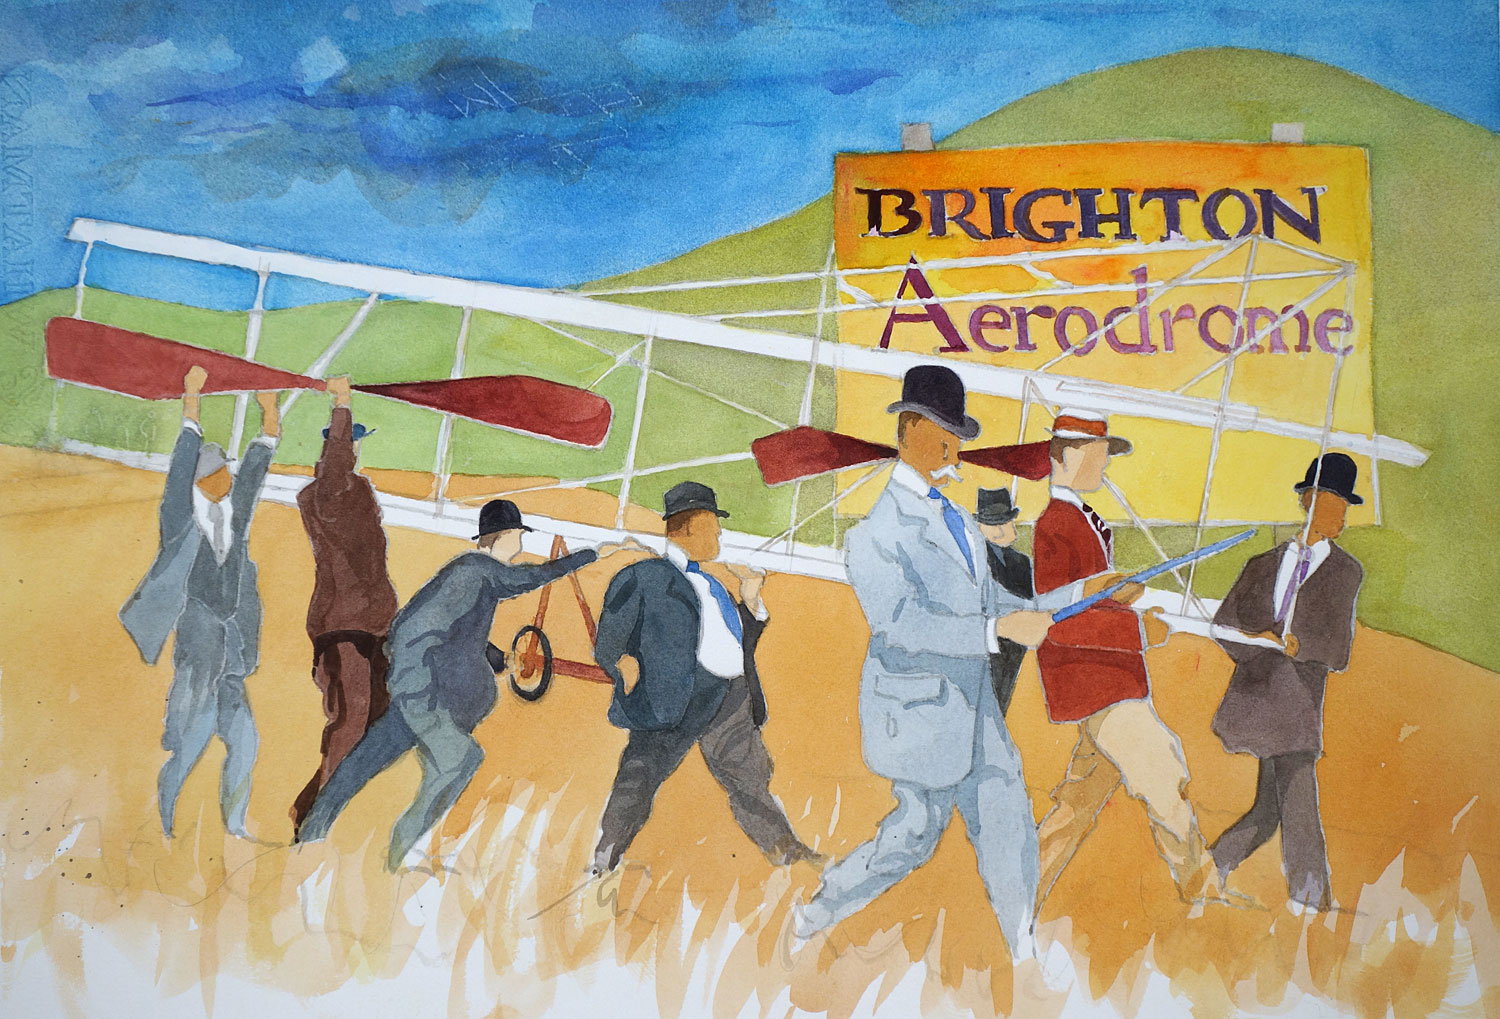 Brighton Aerodrome